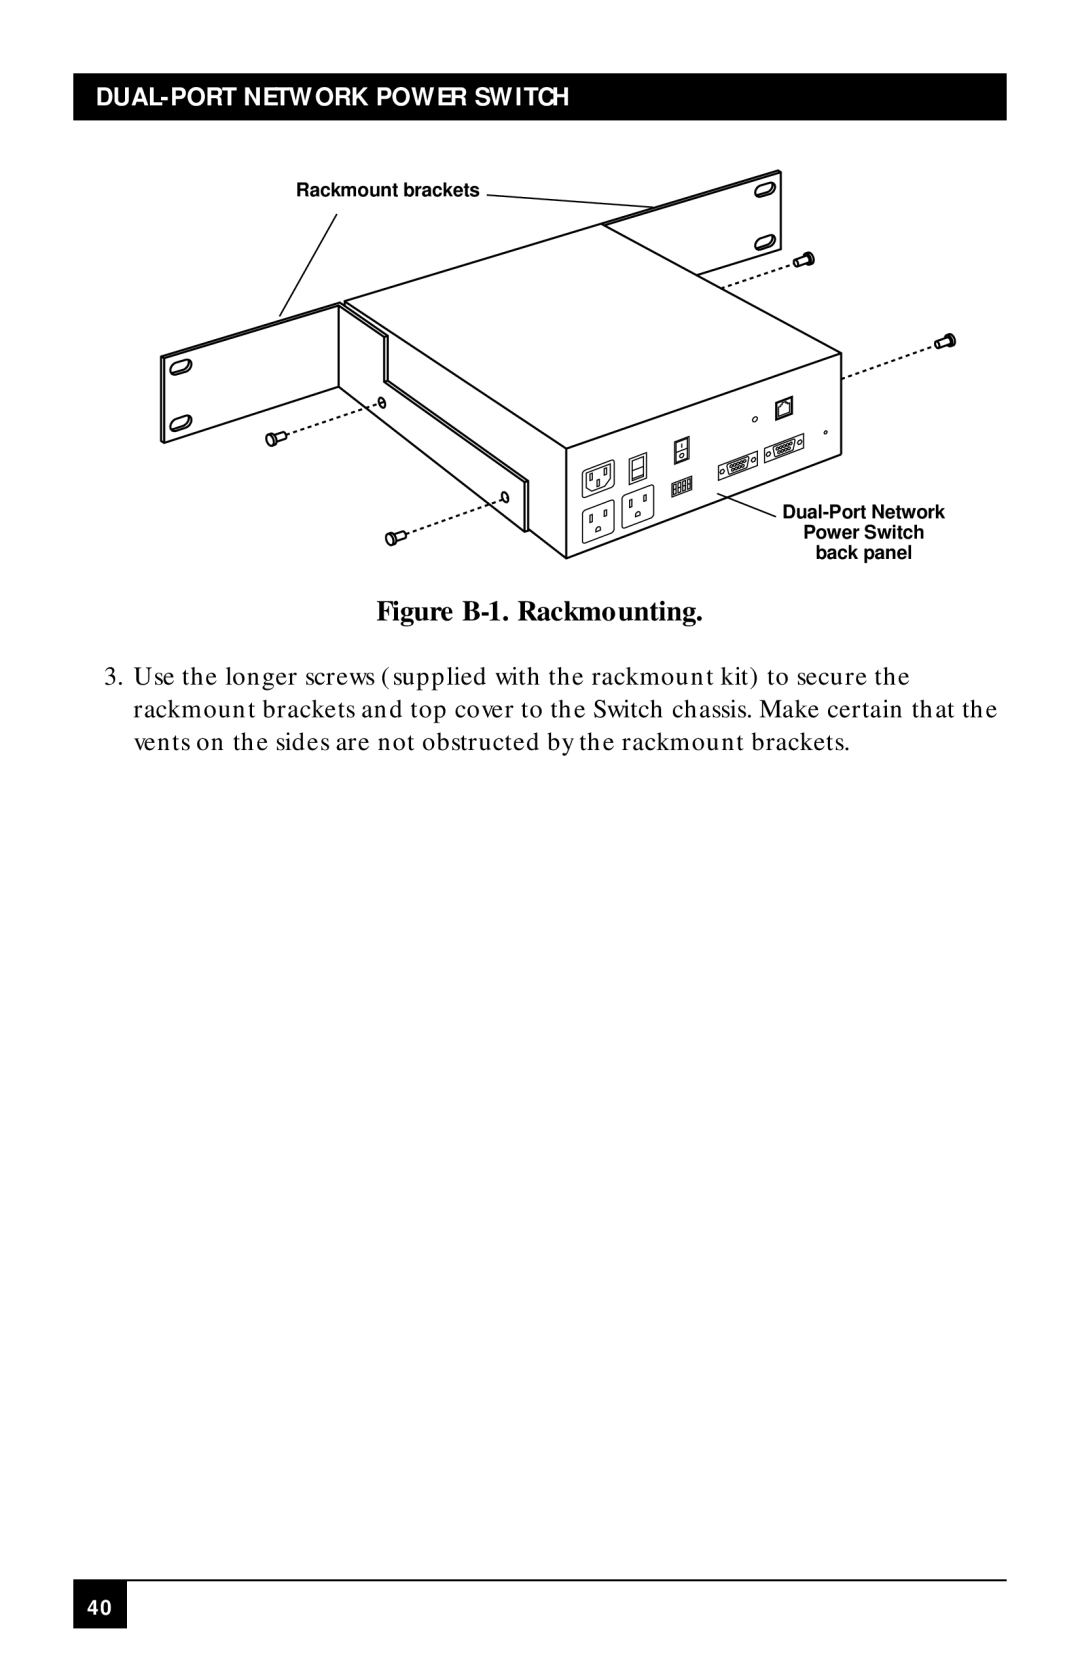 Black Box SWI081A Figure B-1.Rackmounting, Dual-Portnetwork Power Switch, Rackmount brackets Dual-PortNetwork Power Switch 